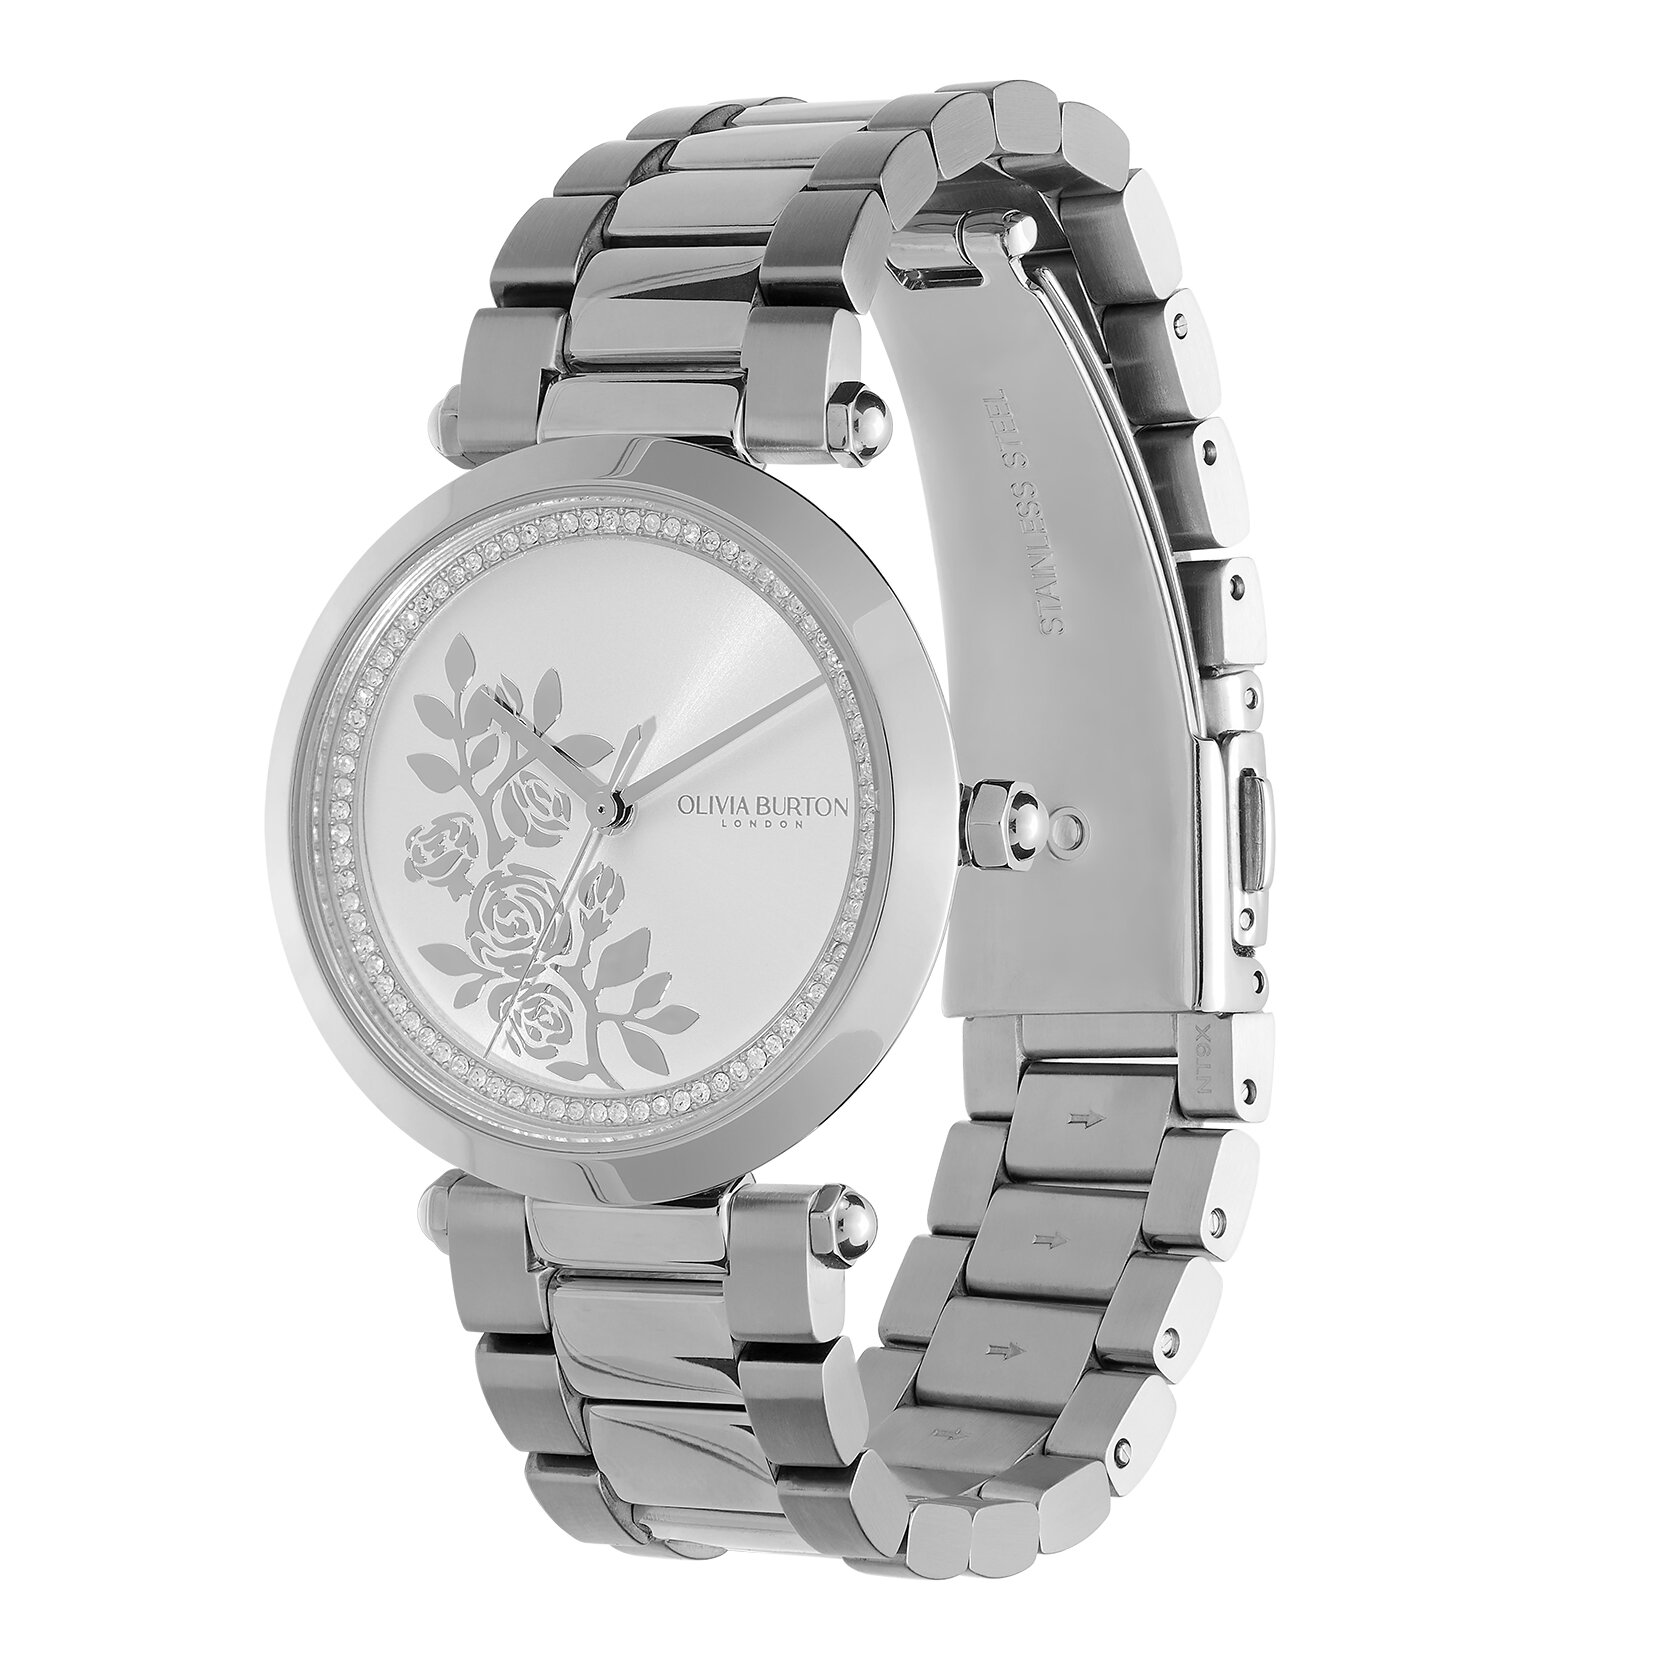 34mm Floral T-Bar White & Silver Bracelet Watch